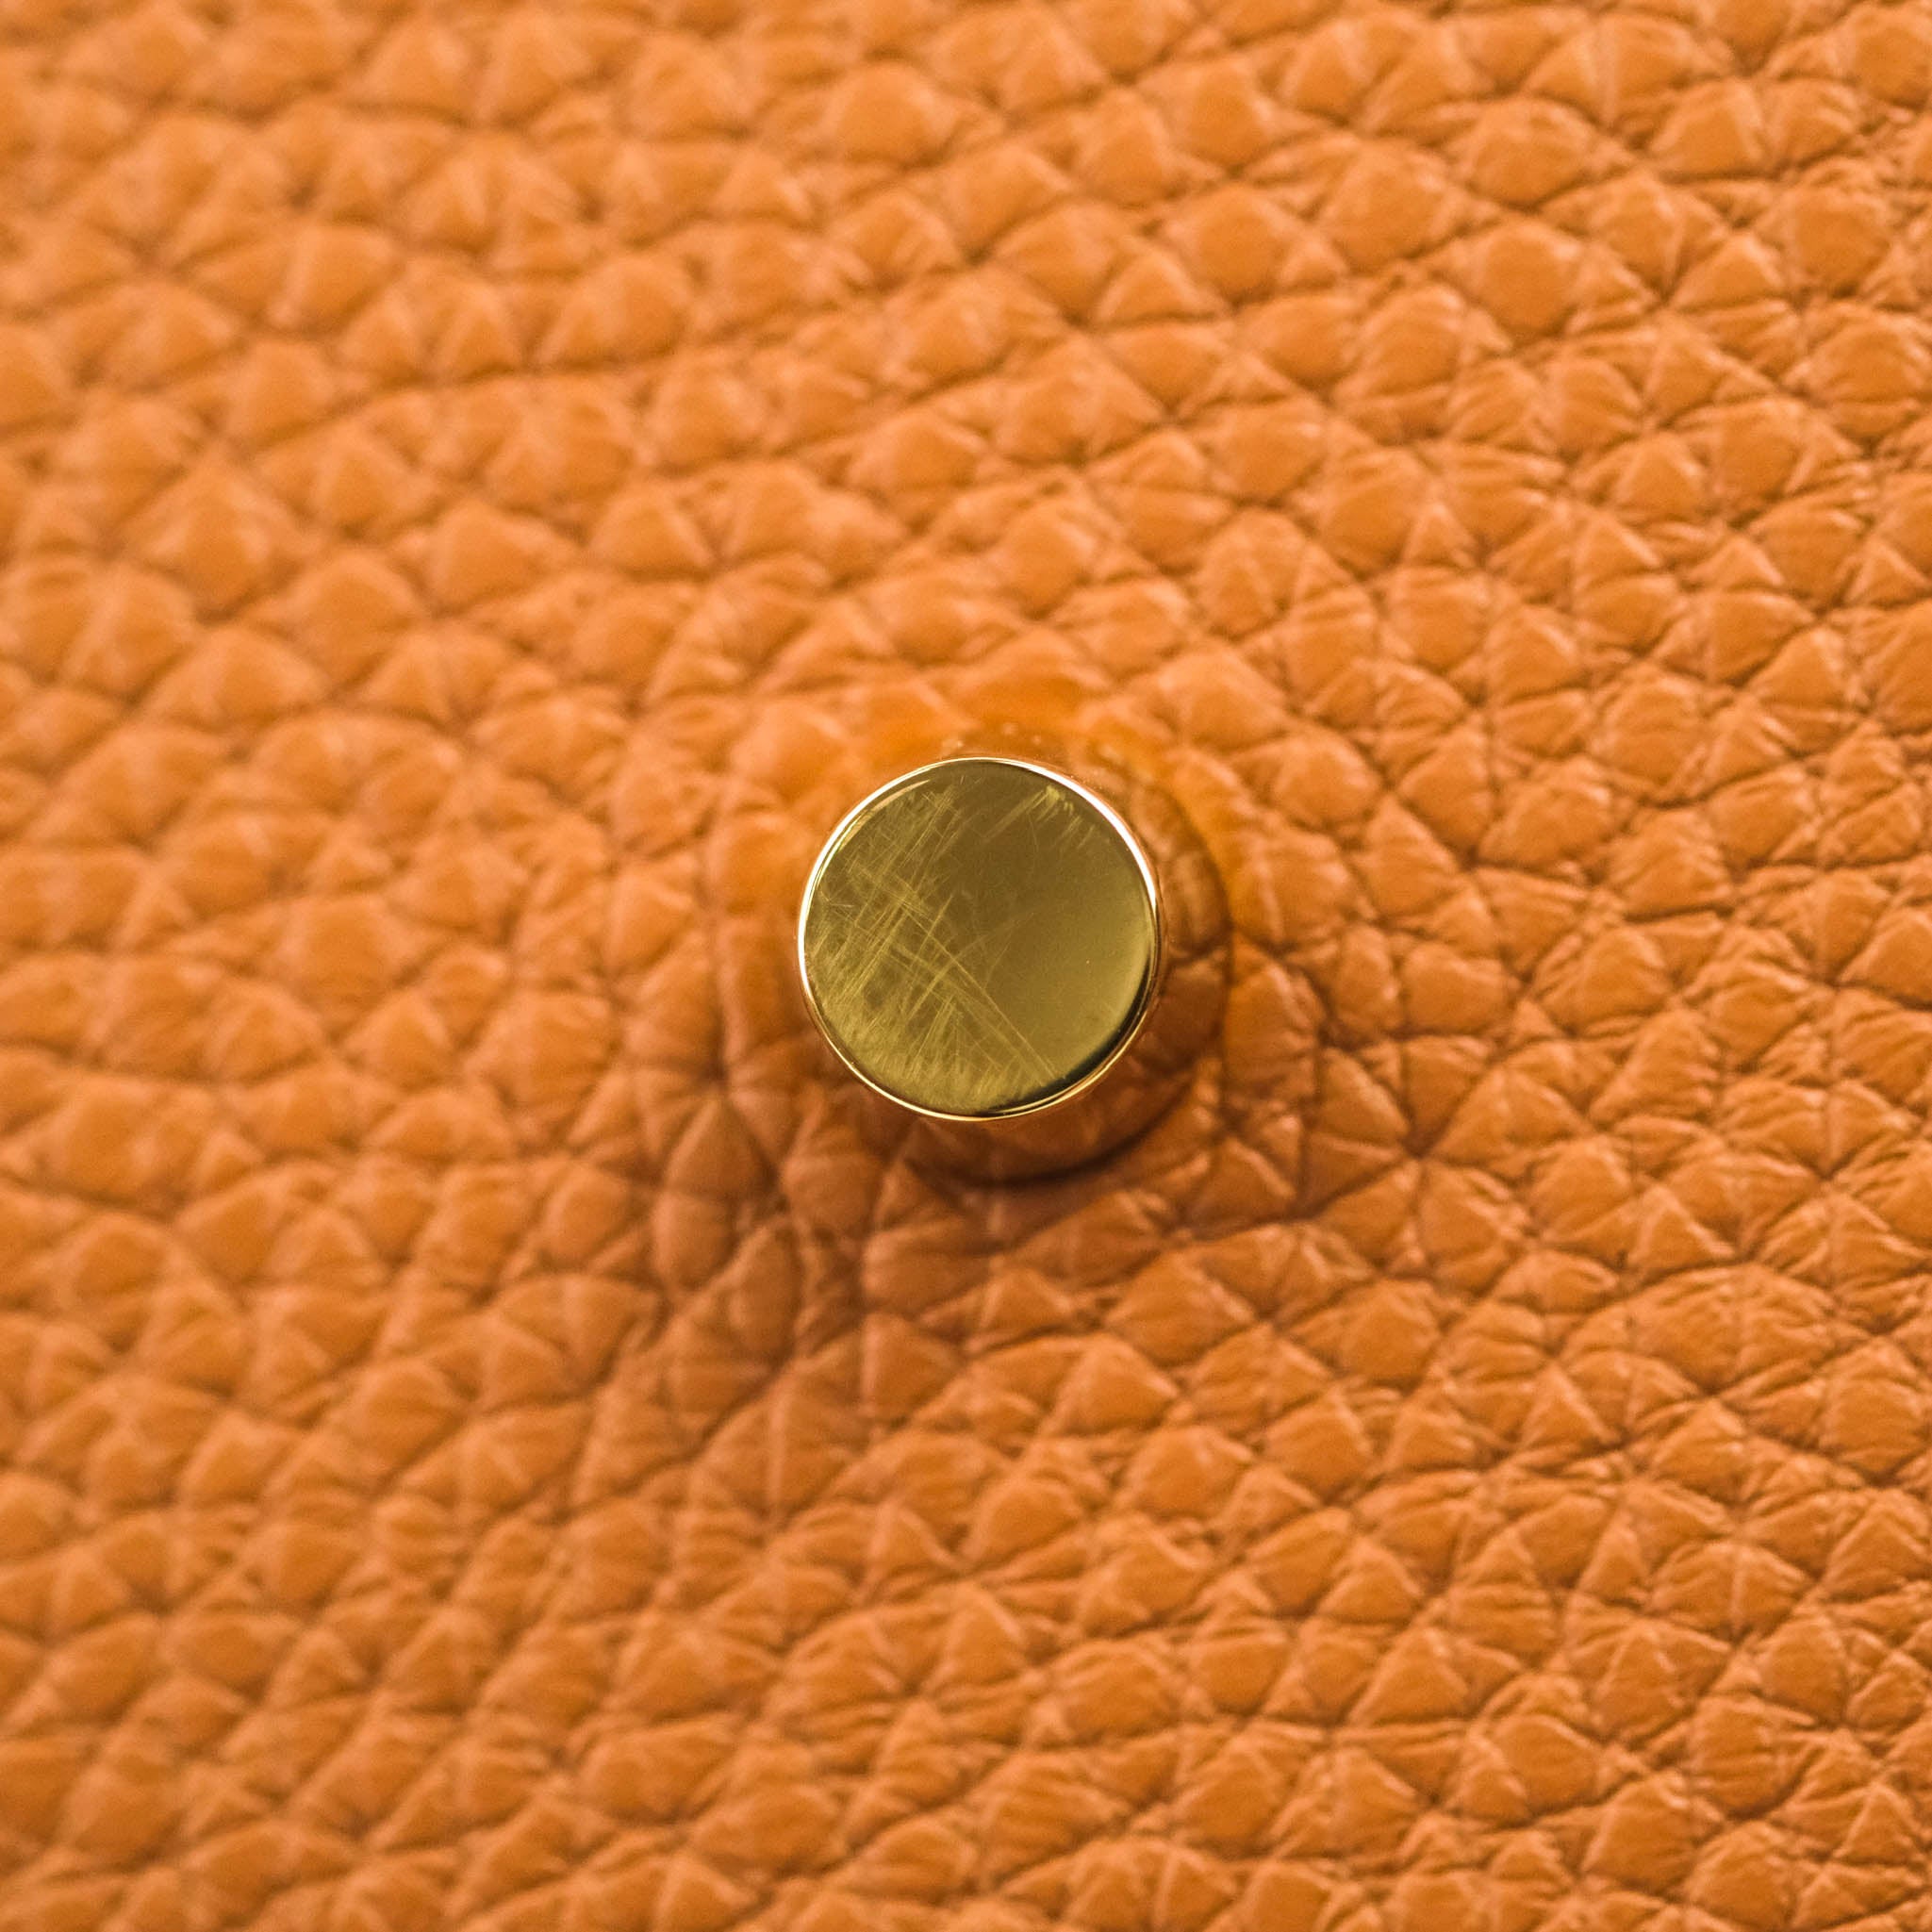 Hermès Lindy 26 Taurillon Clemence Leather Handbag-Gold Gold